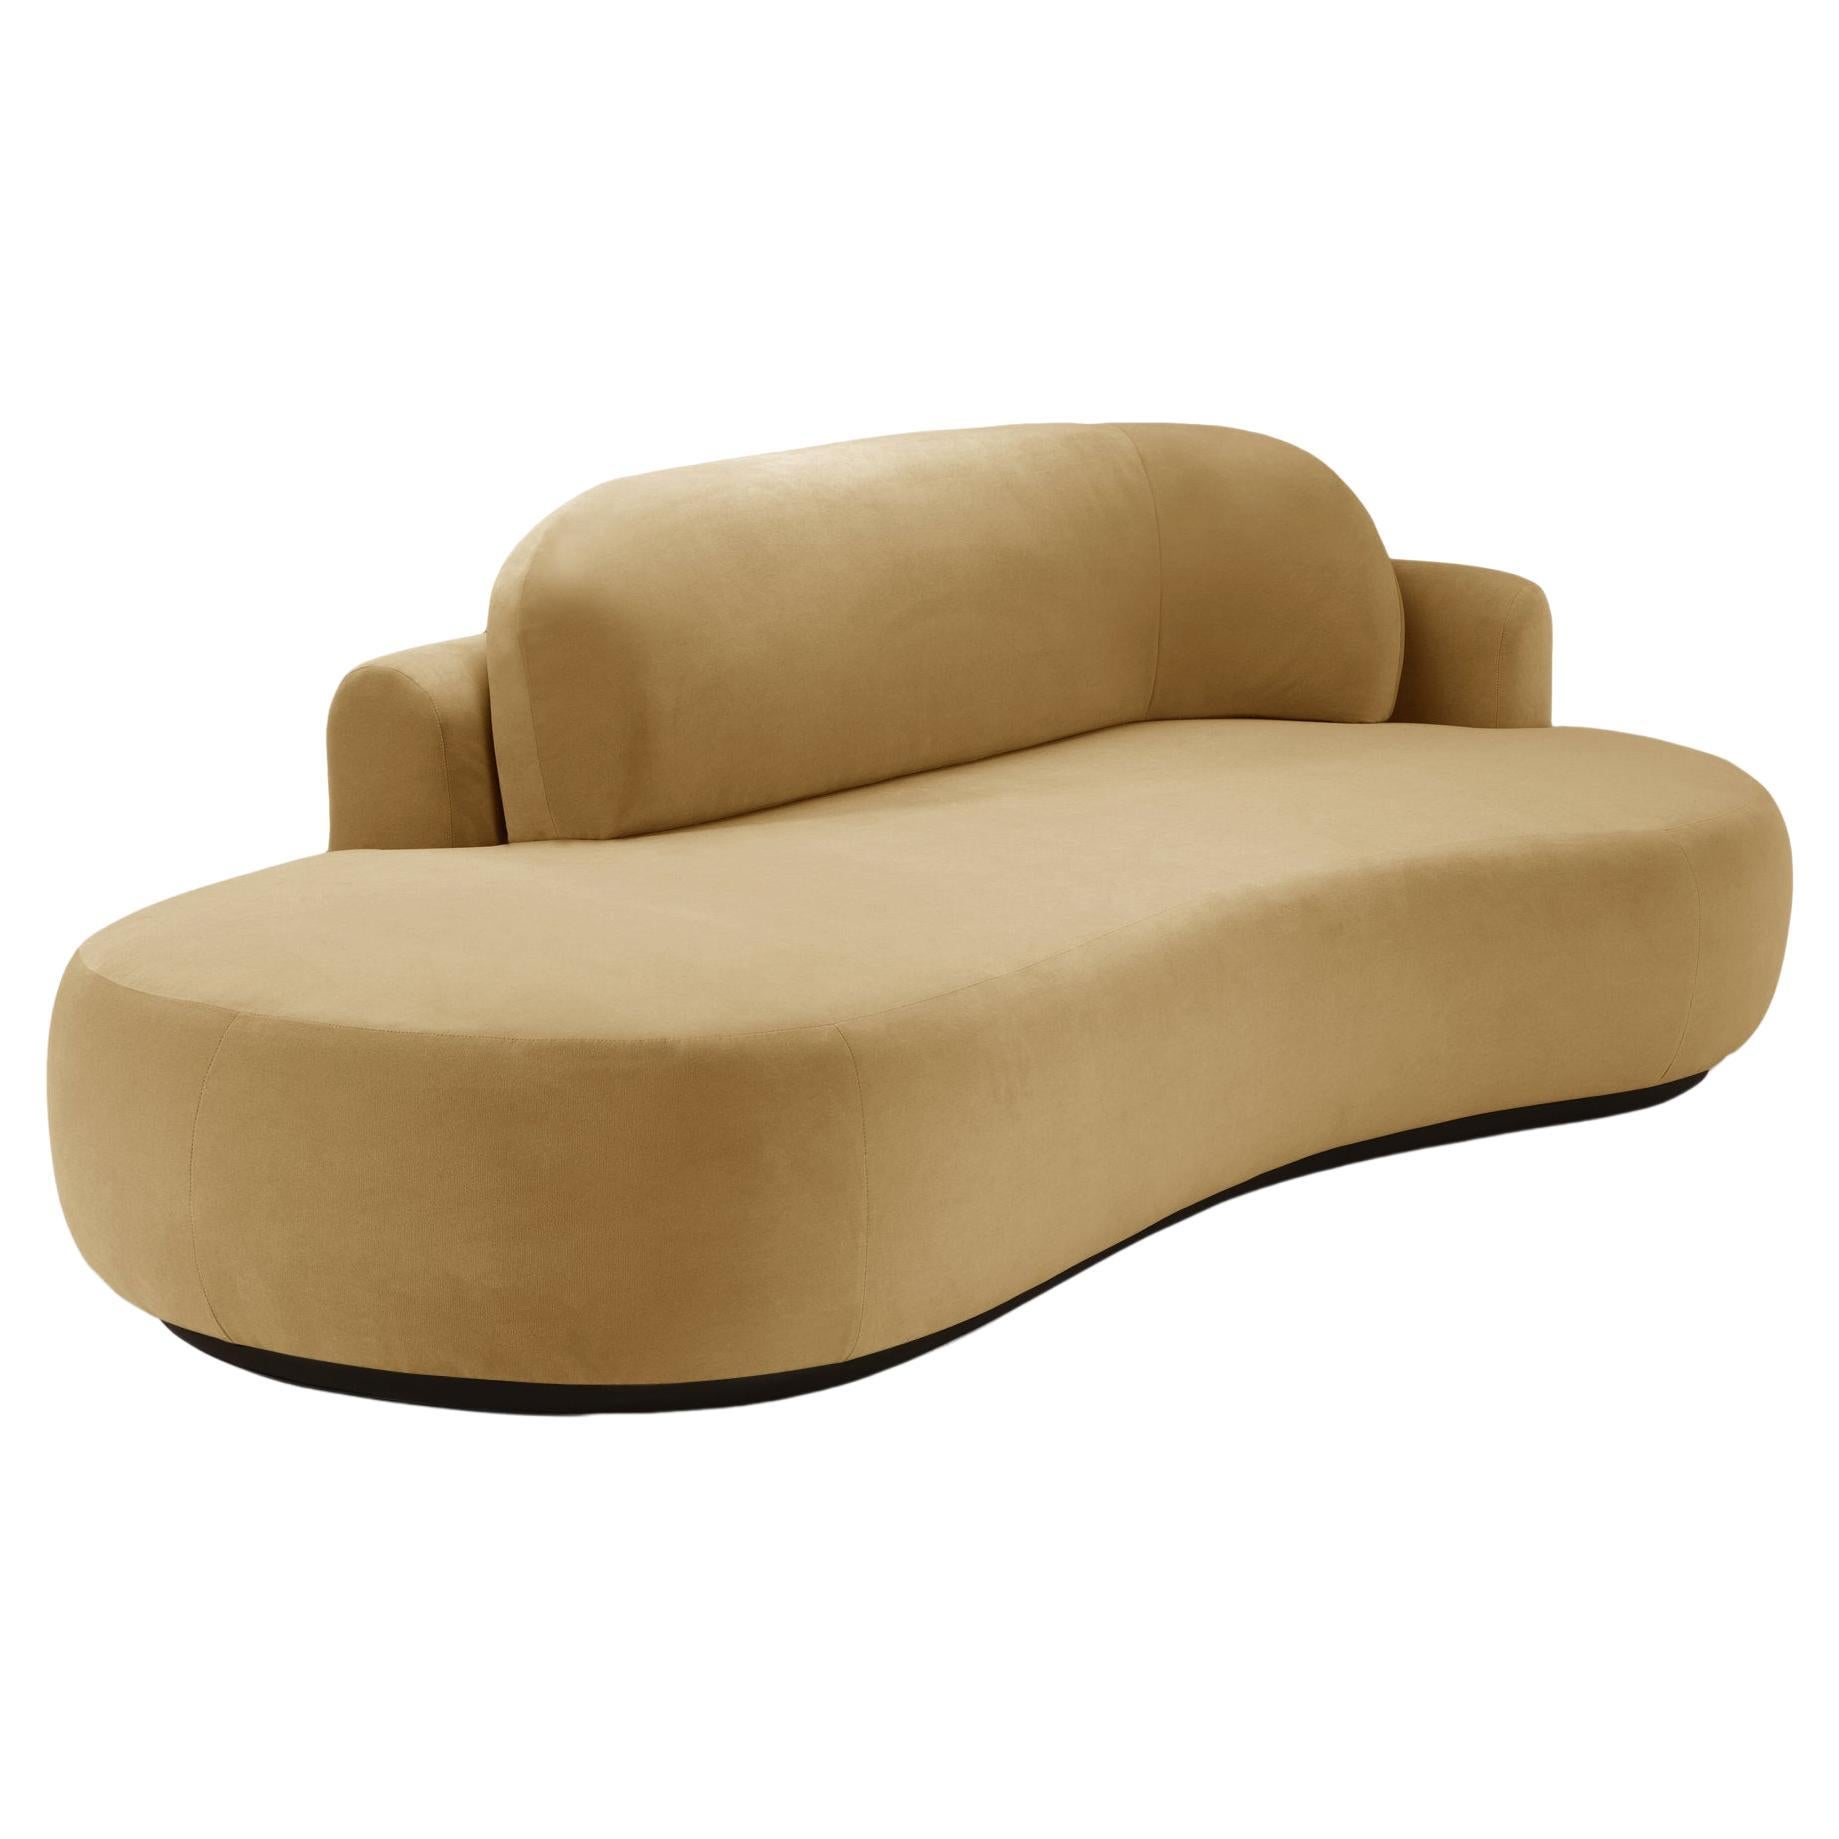 Naked Curved Sofa Single with Beech Ash-056-5 and Vigo Plantain